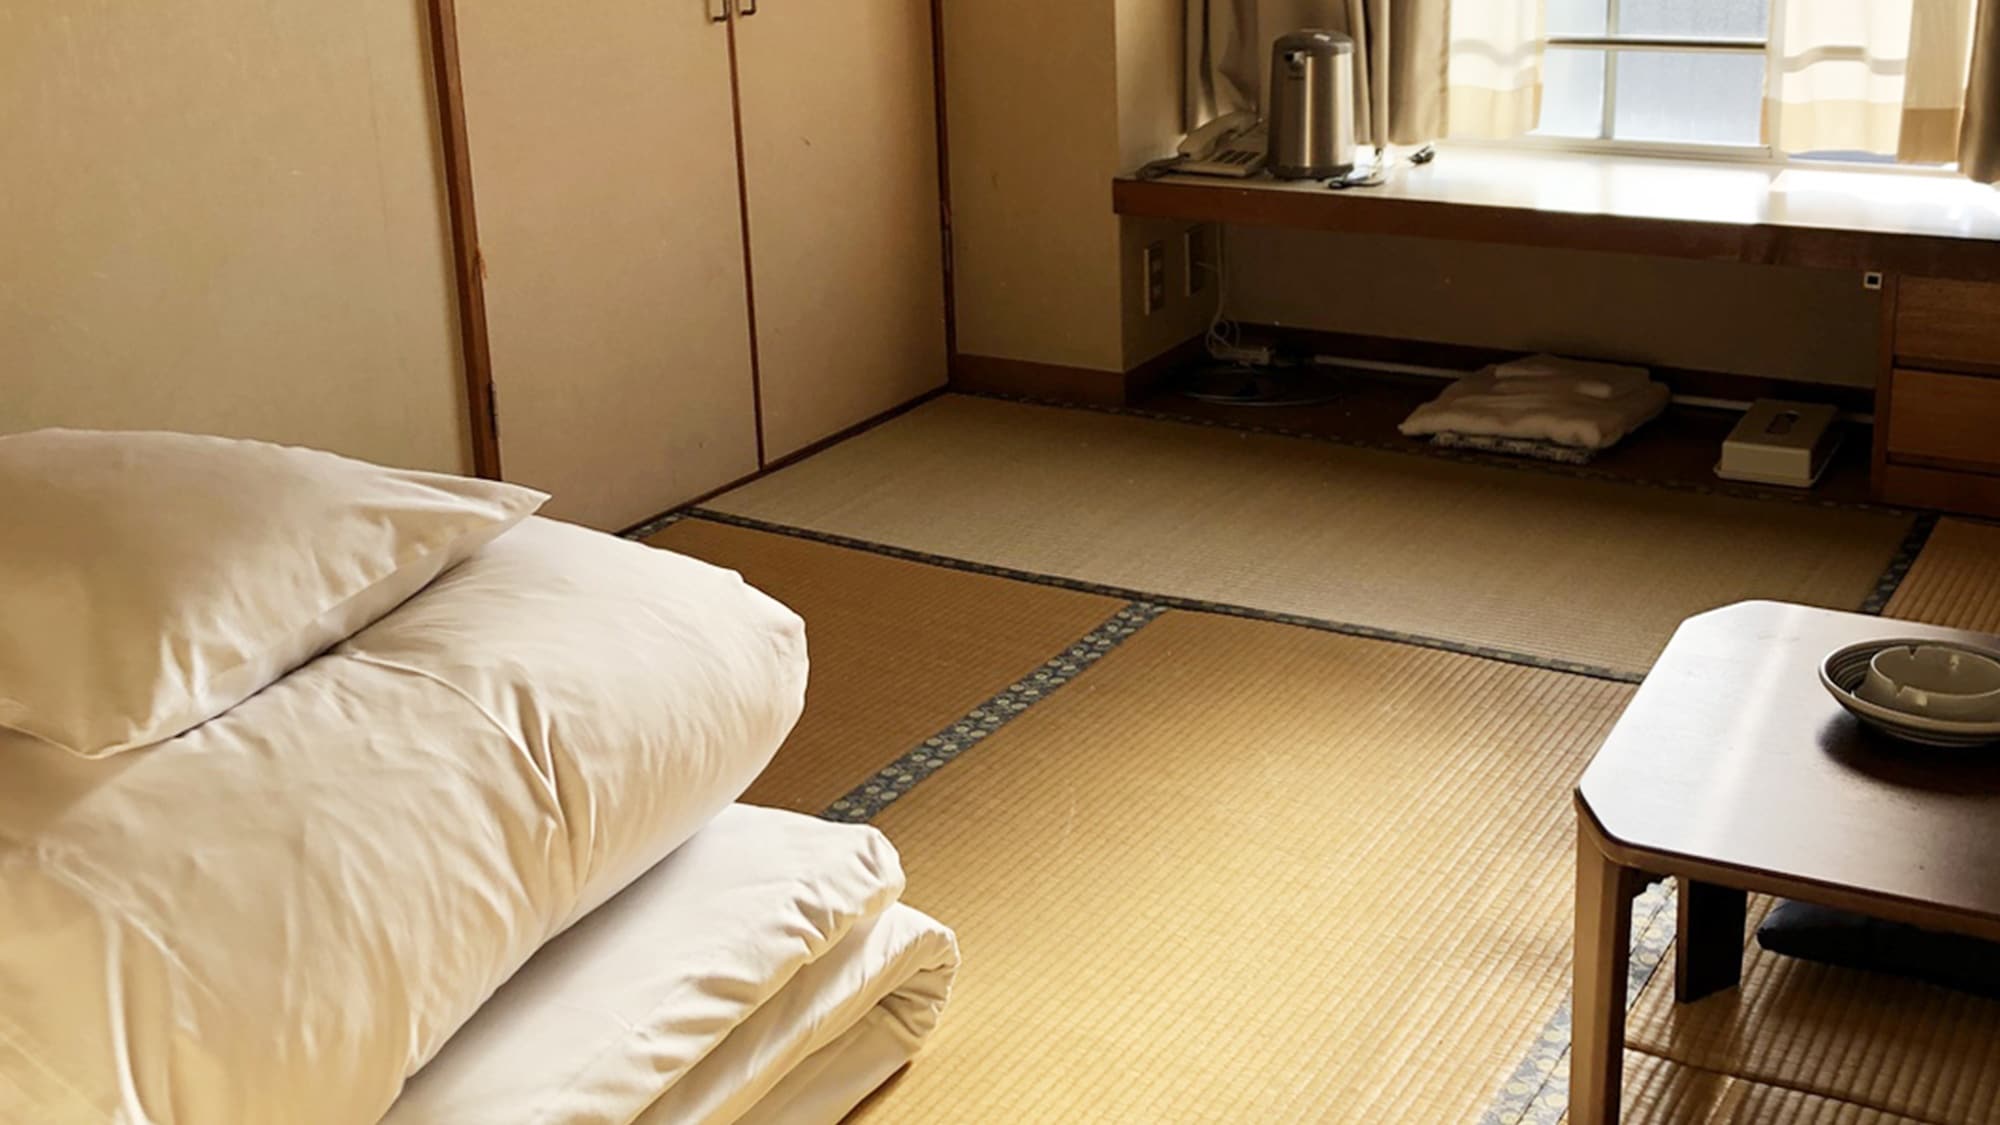 ・ Japanese-style room 6 tatami mats